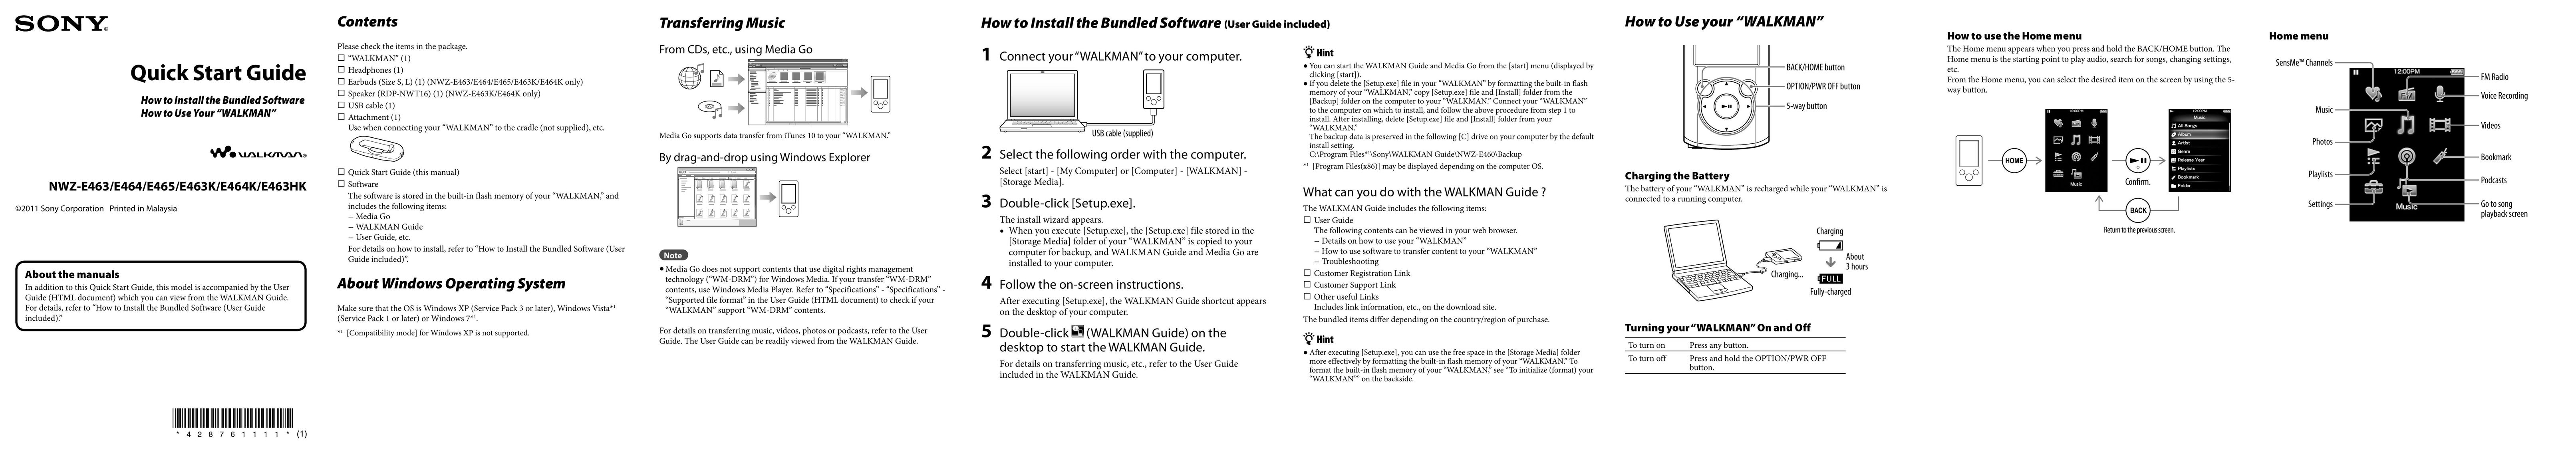 Sony NWZ-E463PNK Portable Multimedia Player User Manual